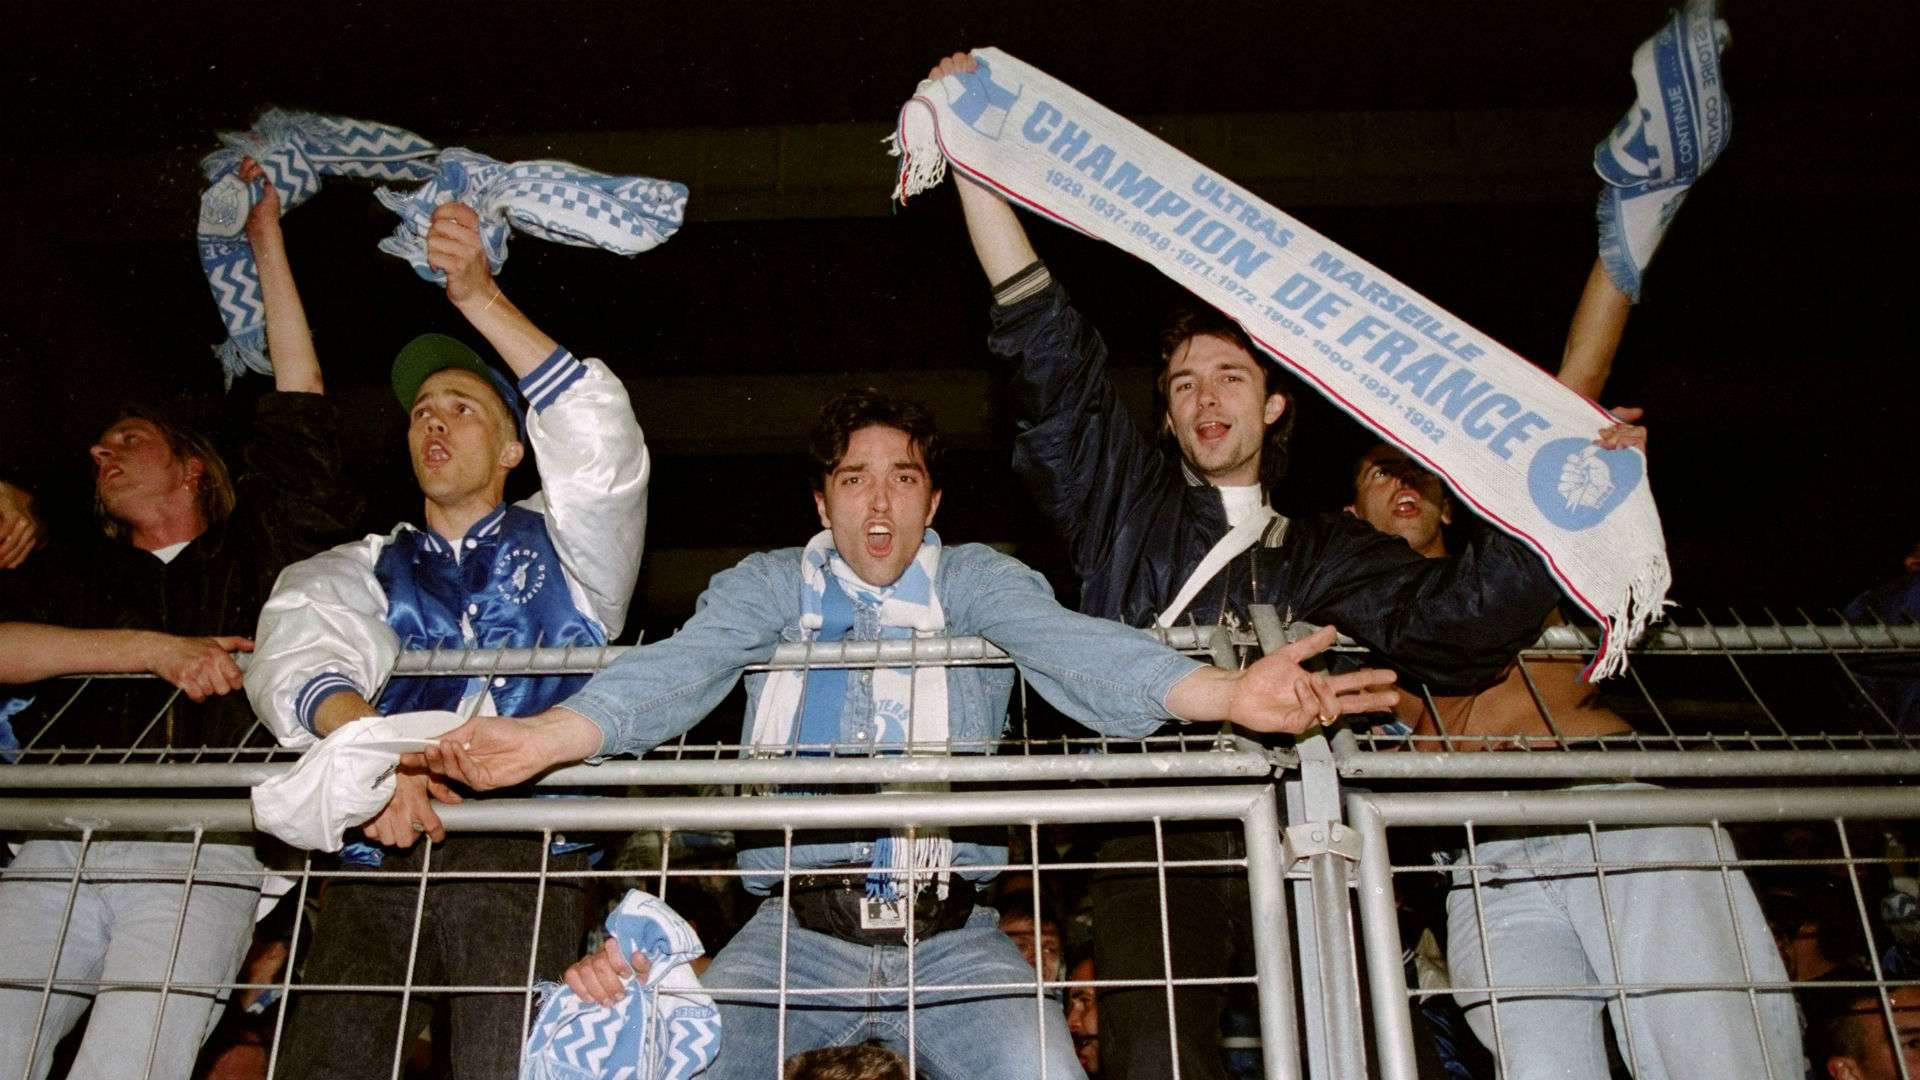 Marseille fans